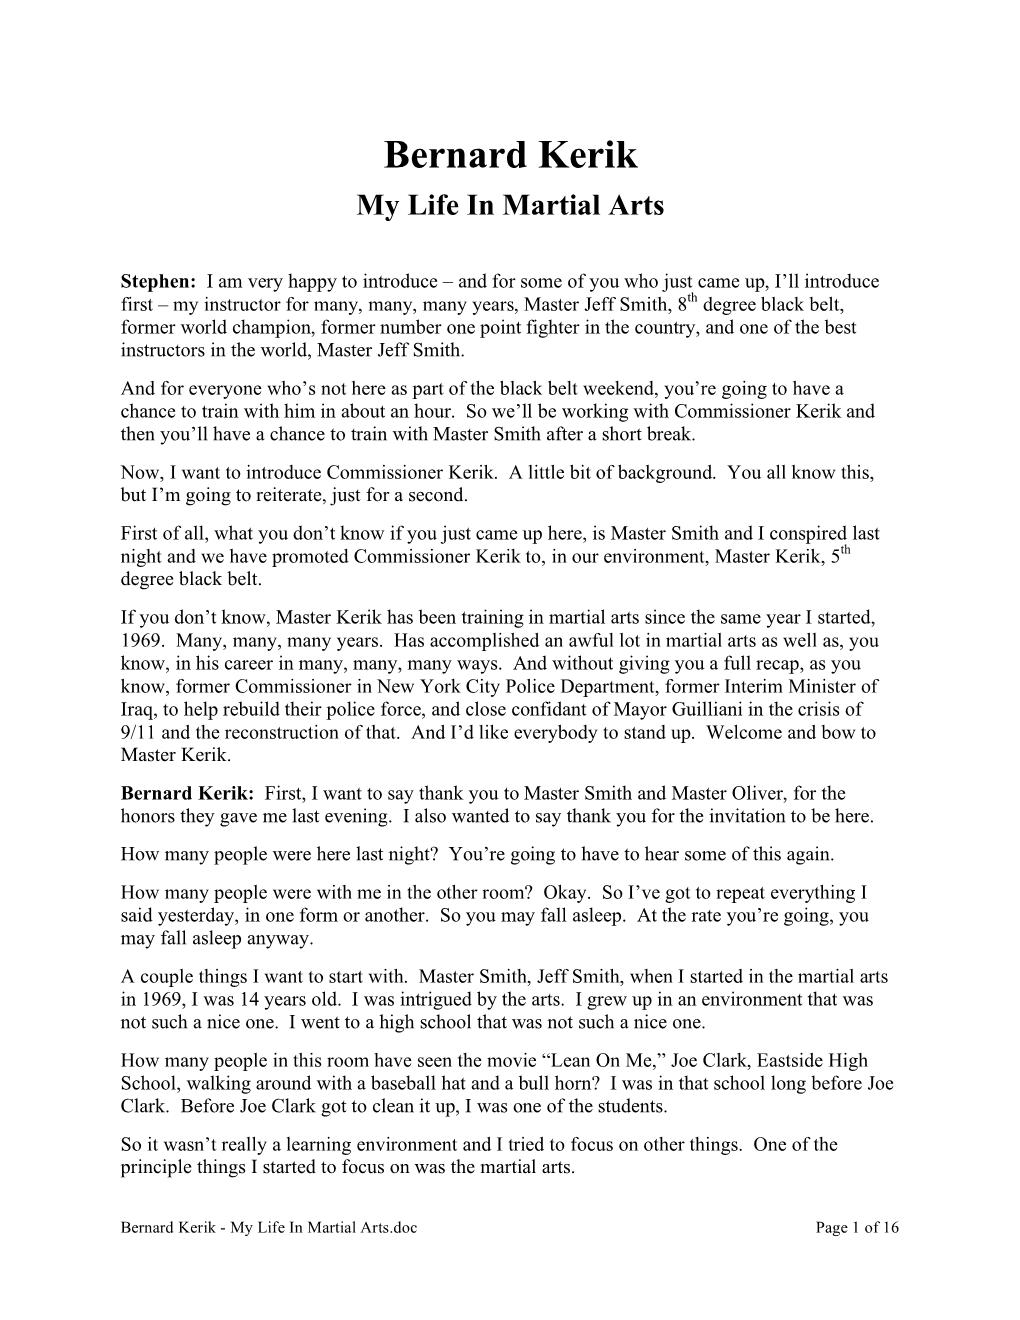 Bernard Kerik My Life in Martial Arts